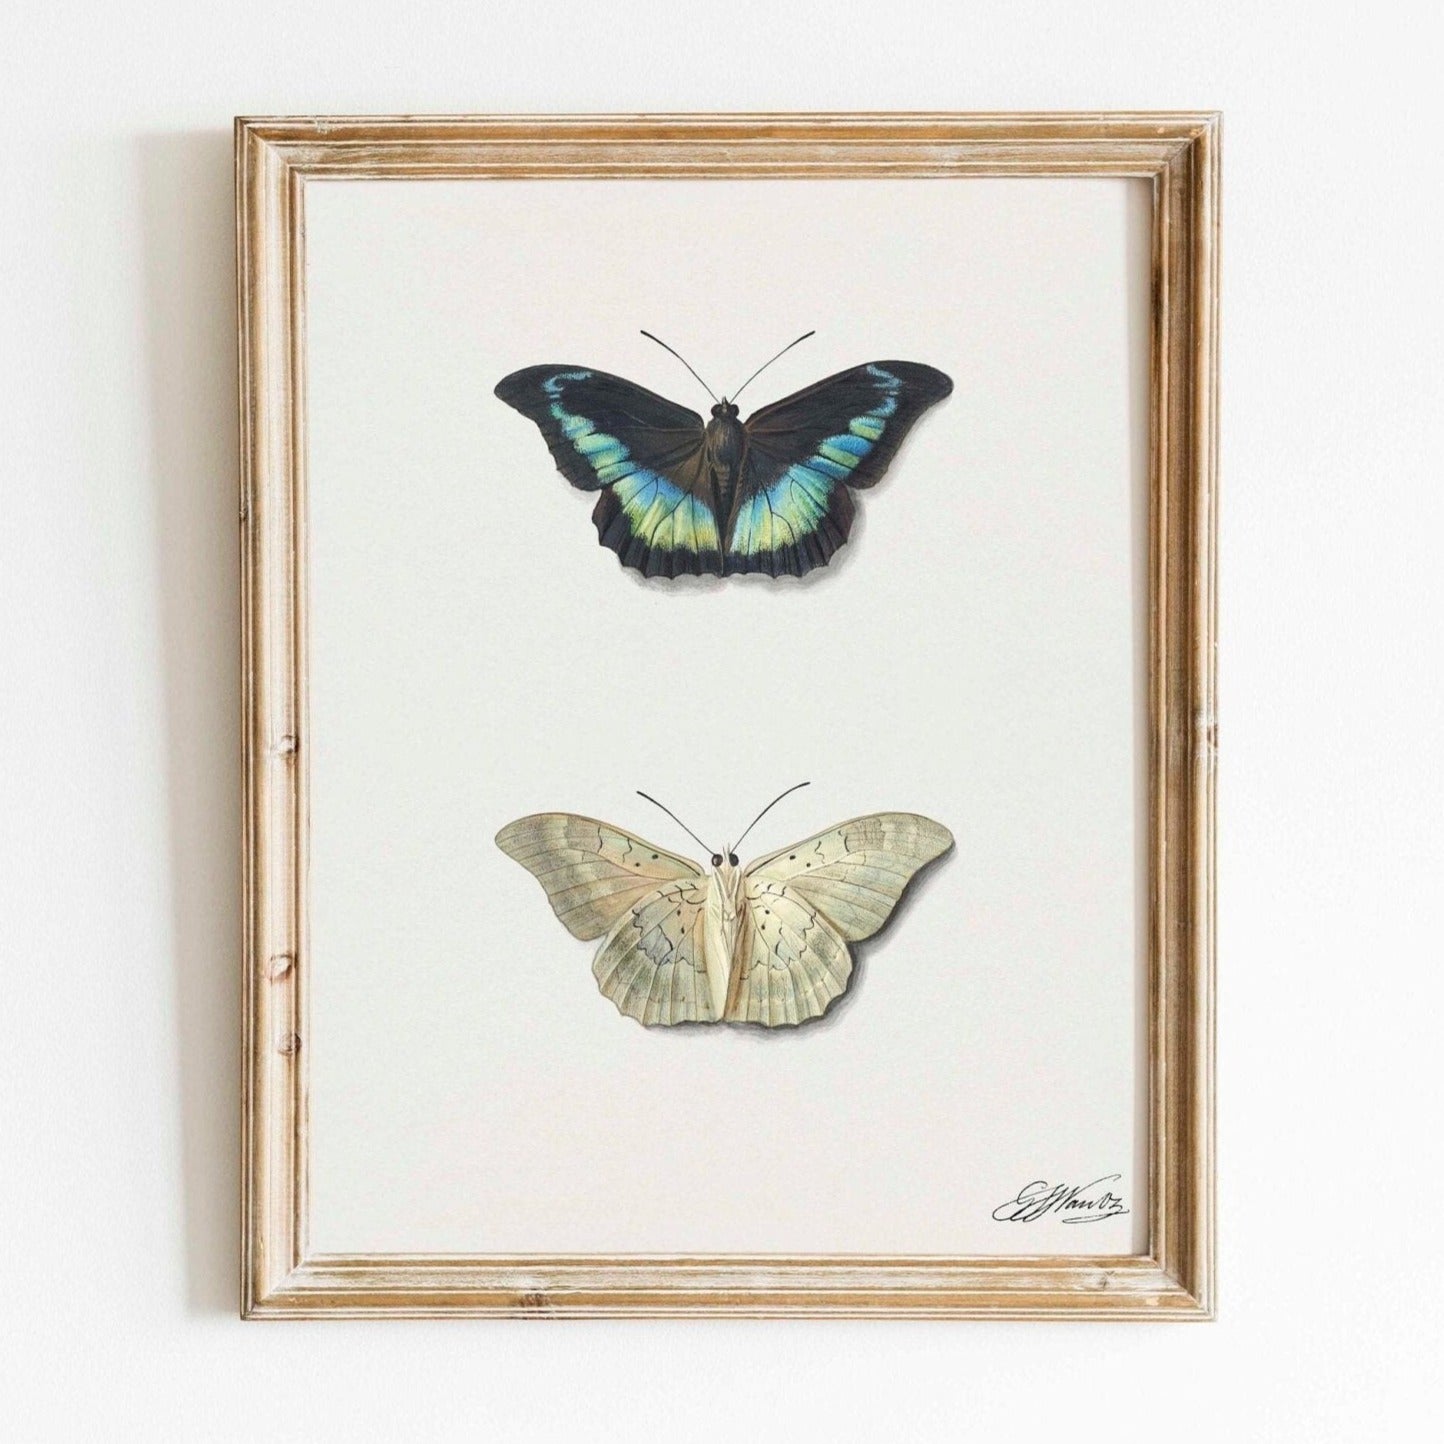 Butterfly (Vintage Illustration by Georgius Jacobus Johannes Van Os)